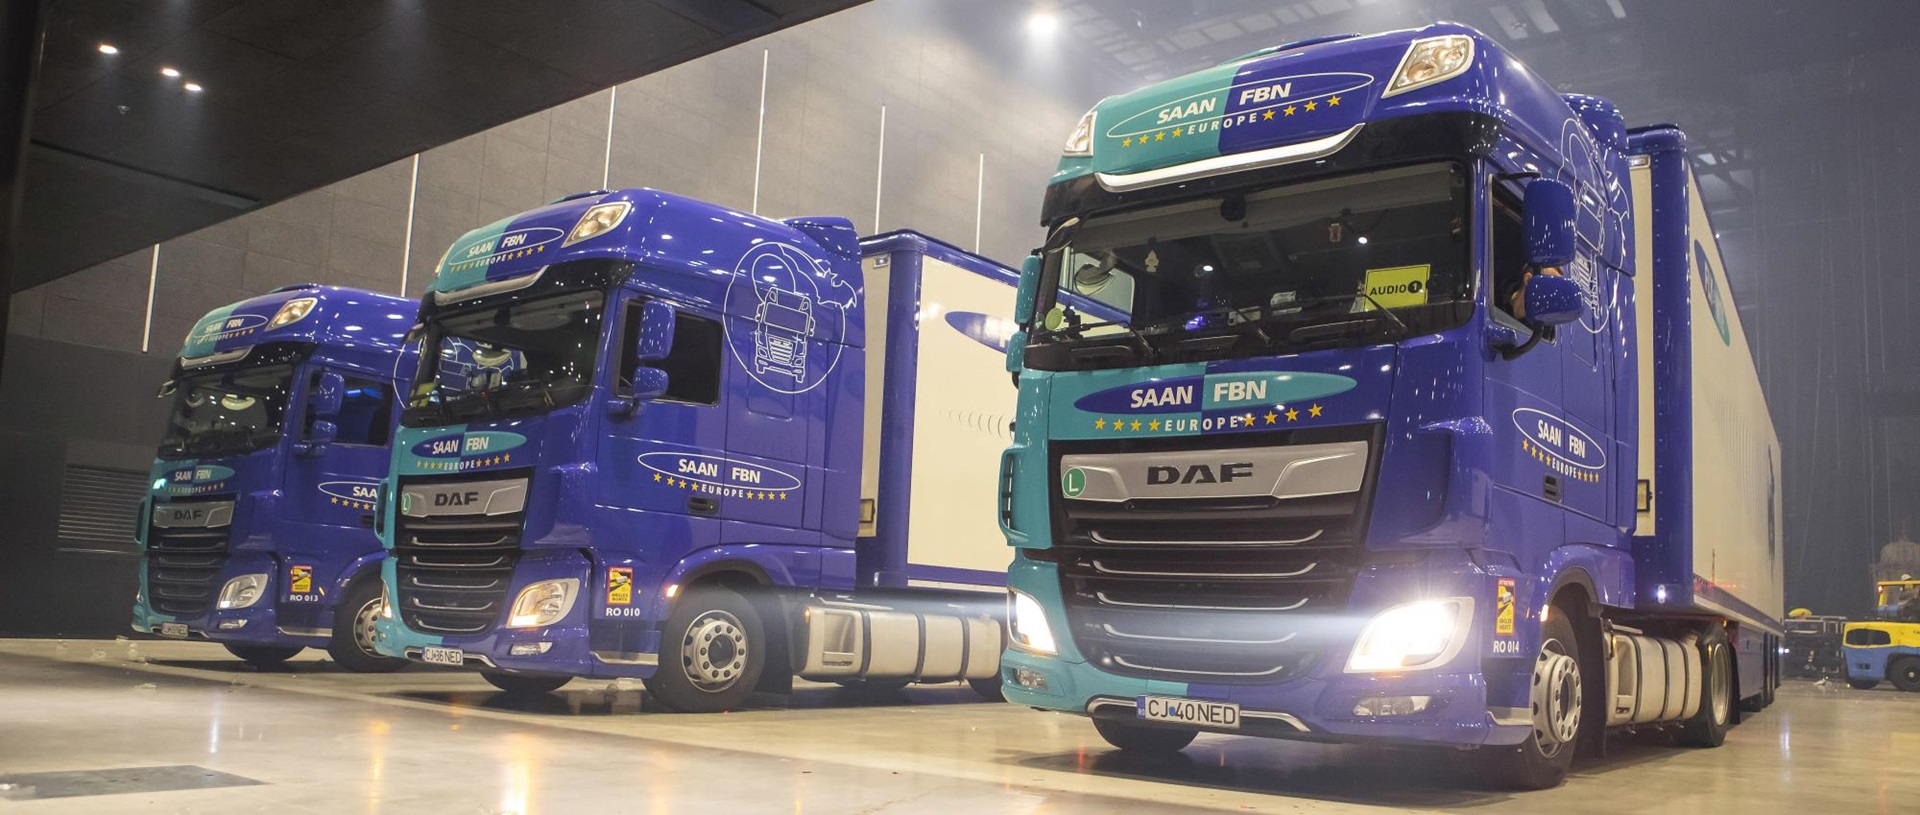 DAF-Used-Trucks-Saan-FBN_22-25-4-header-fw